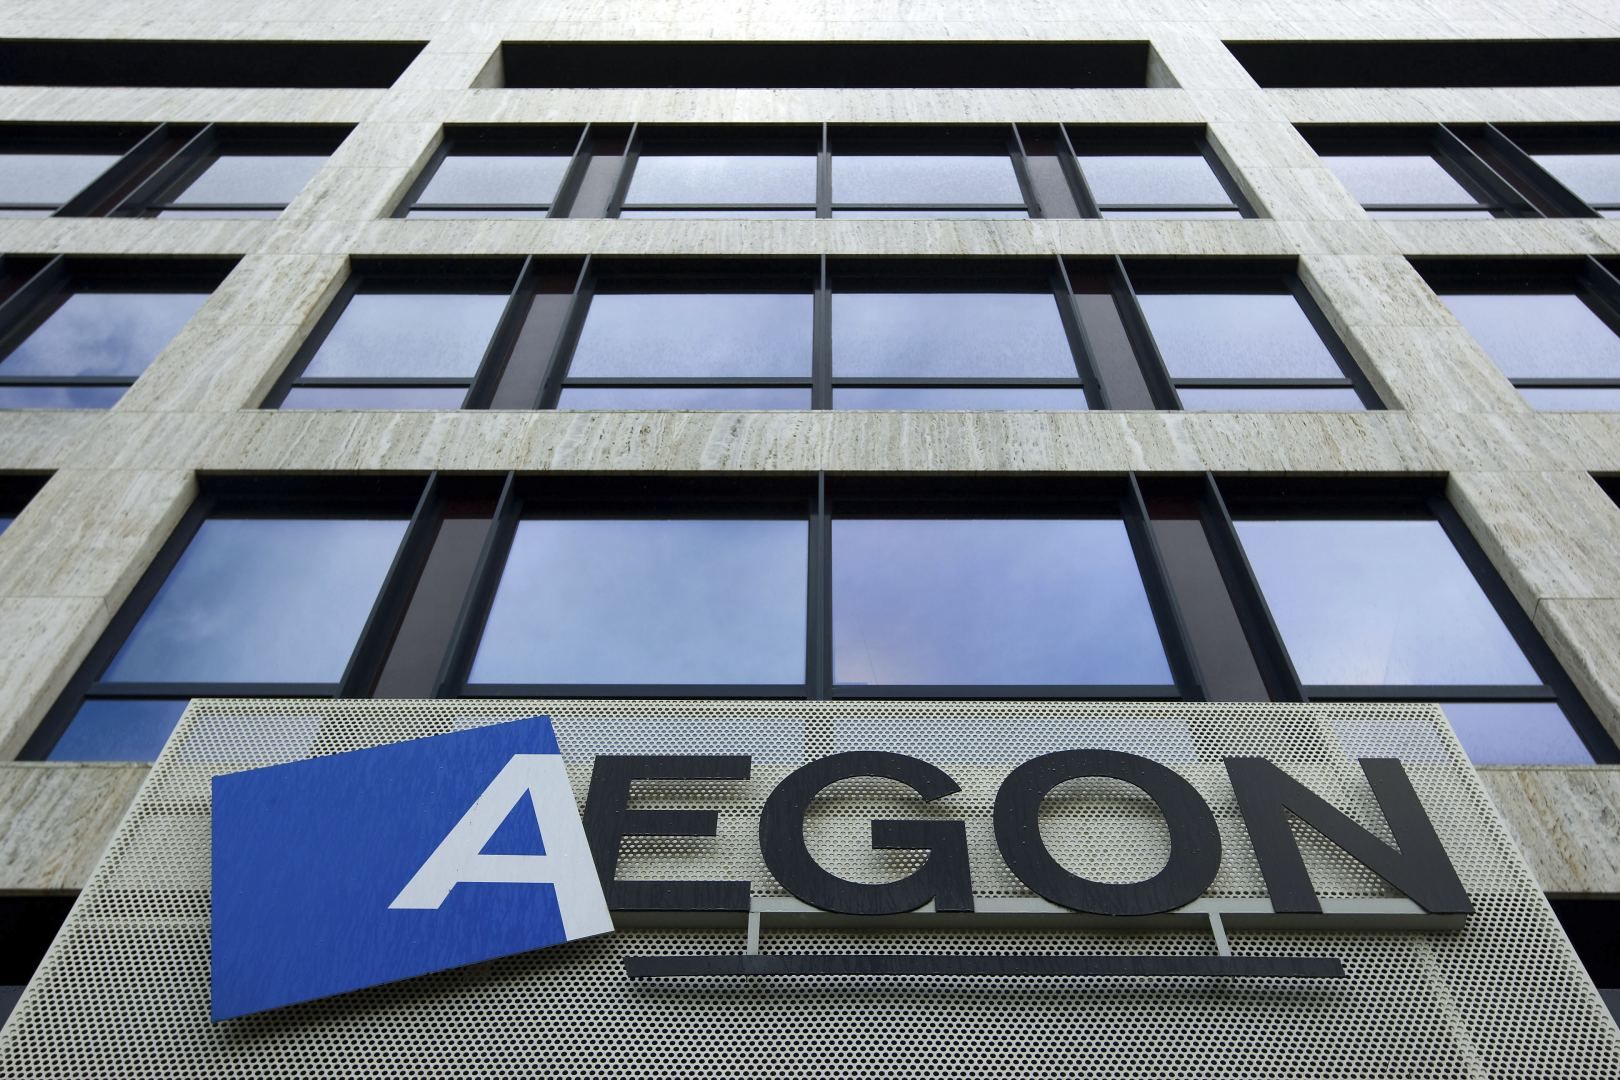 Dutch insurer Aegon raises forecasts for capital, cashflow